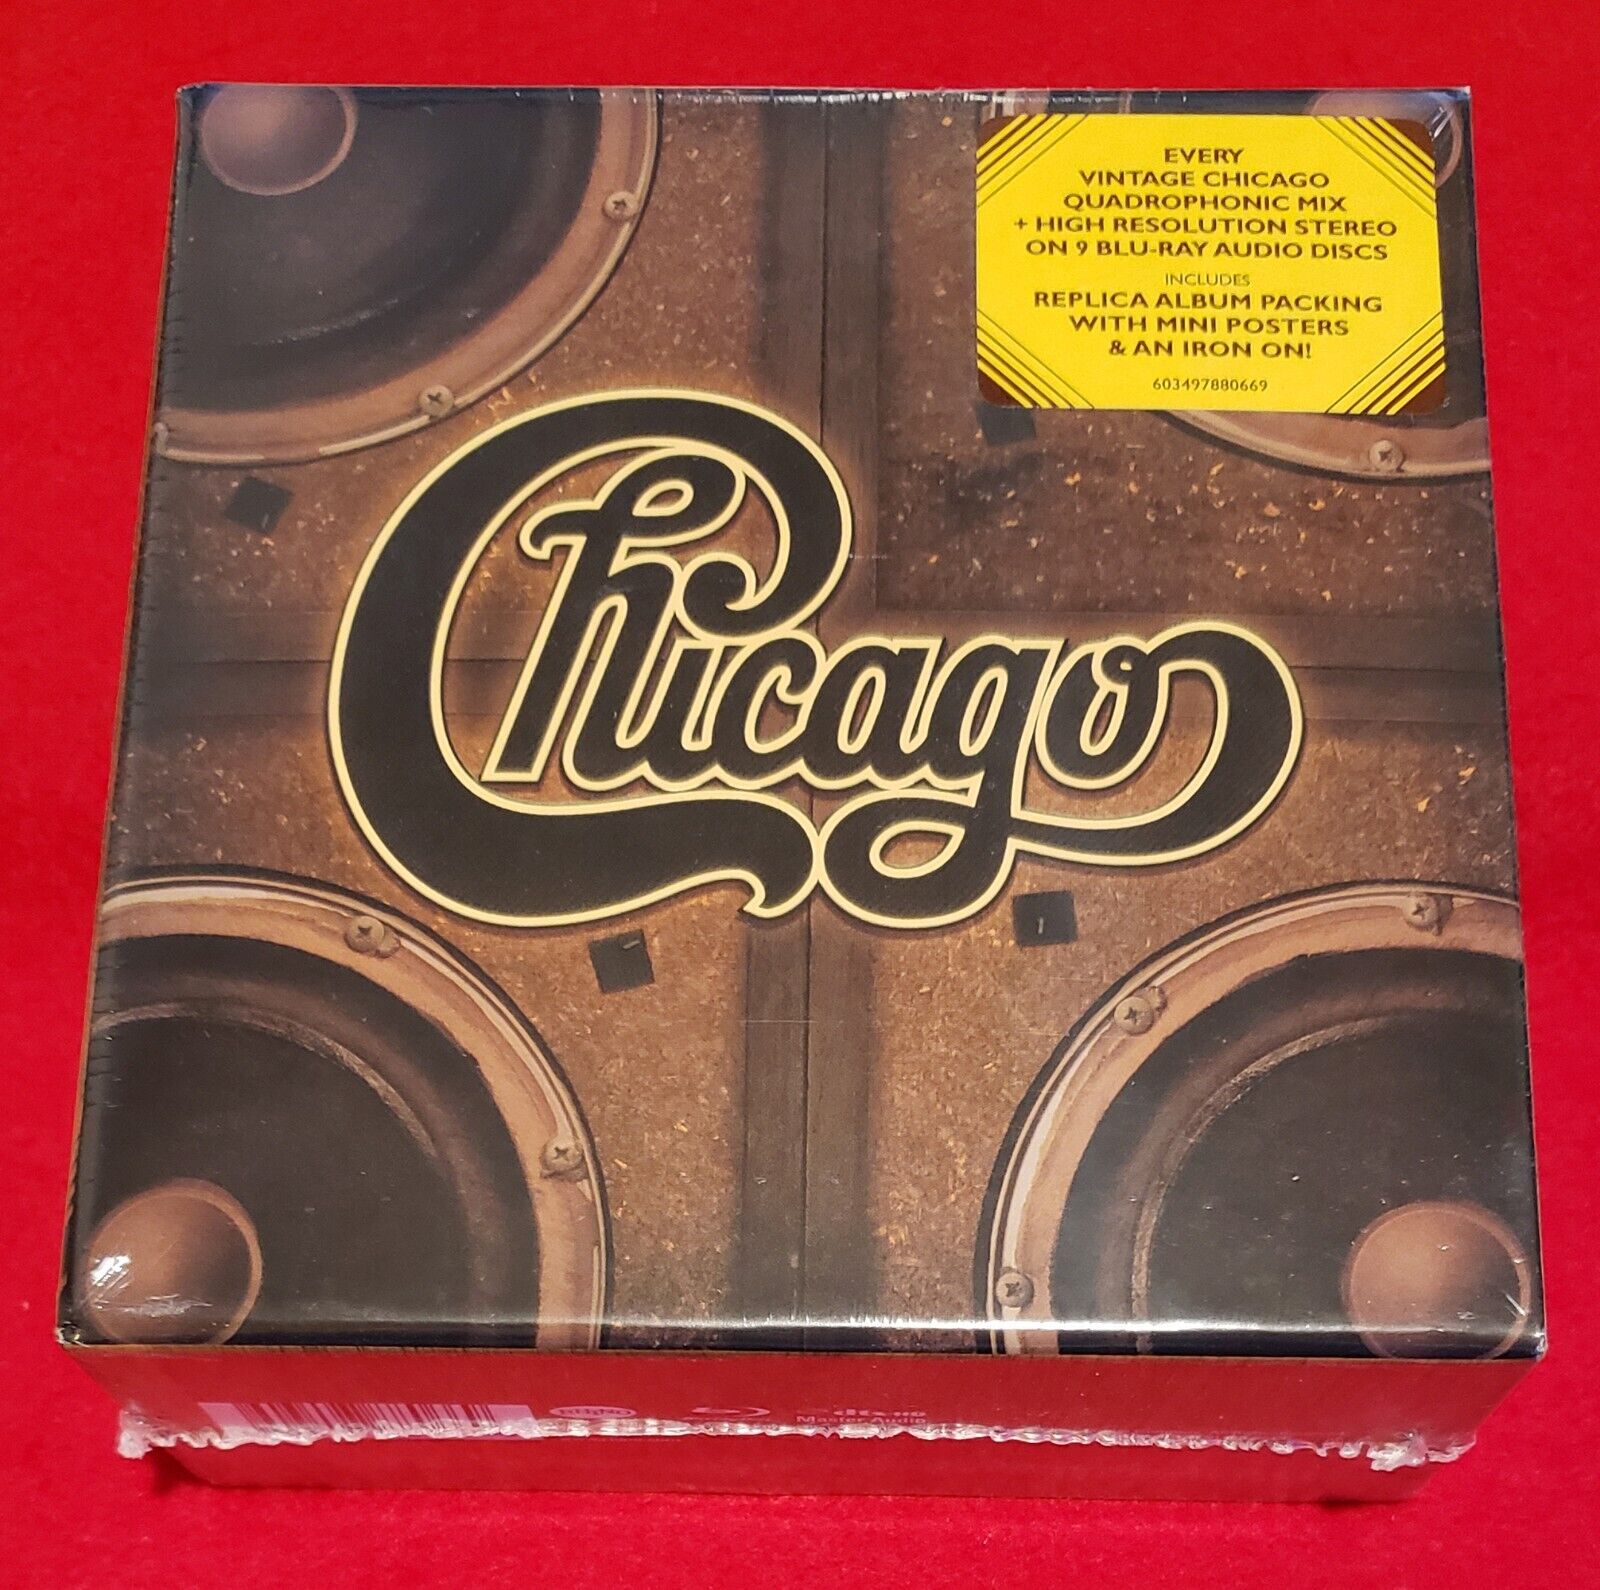 Chicago Quadio Box (Blu-ray Audio) for sale online | eBay